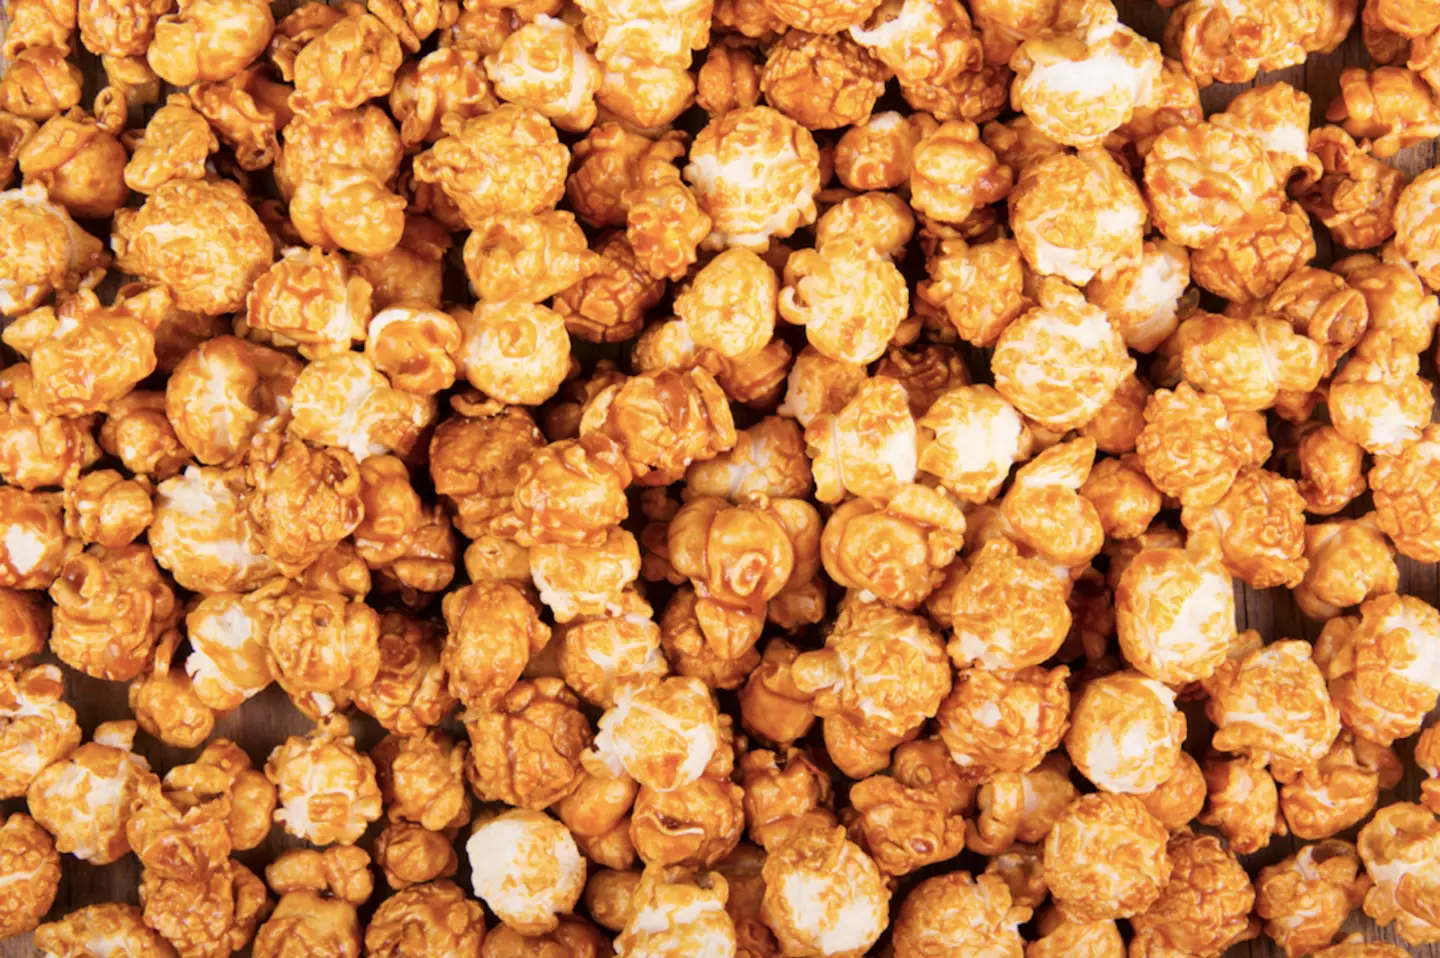 Salted caramel popcorn is suddenly hugely popular (